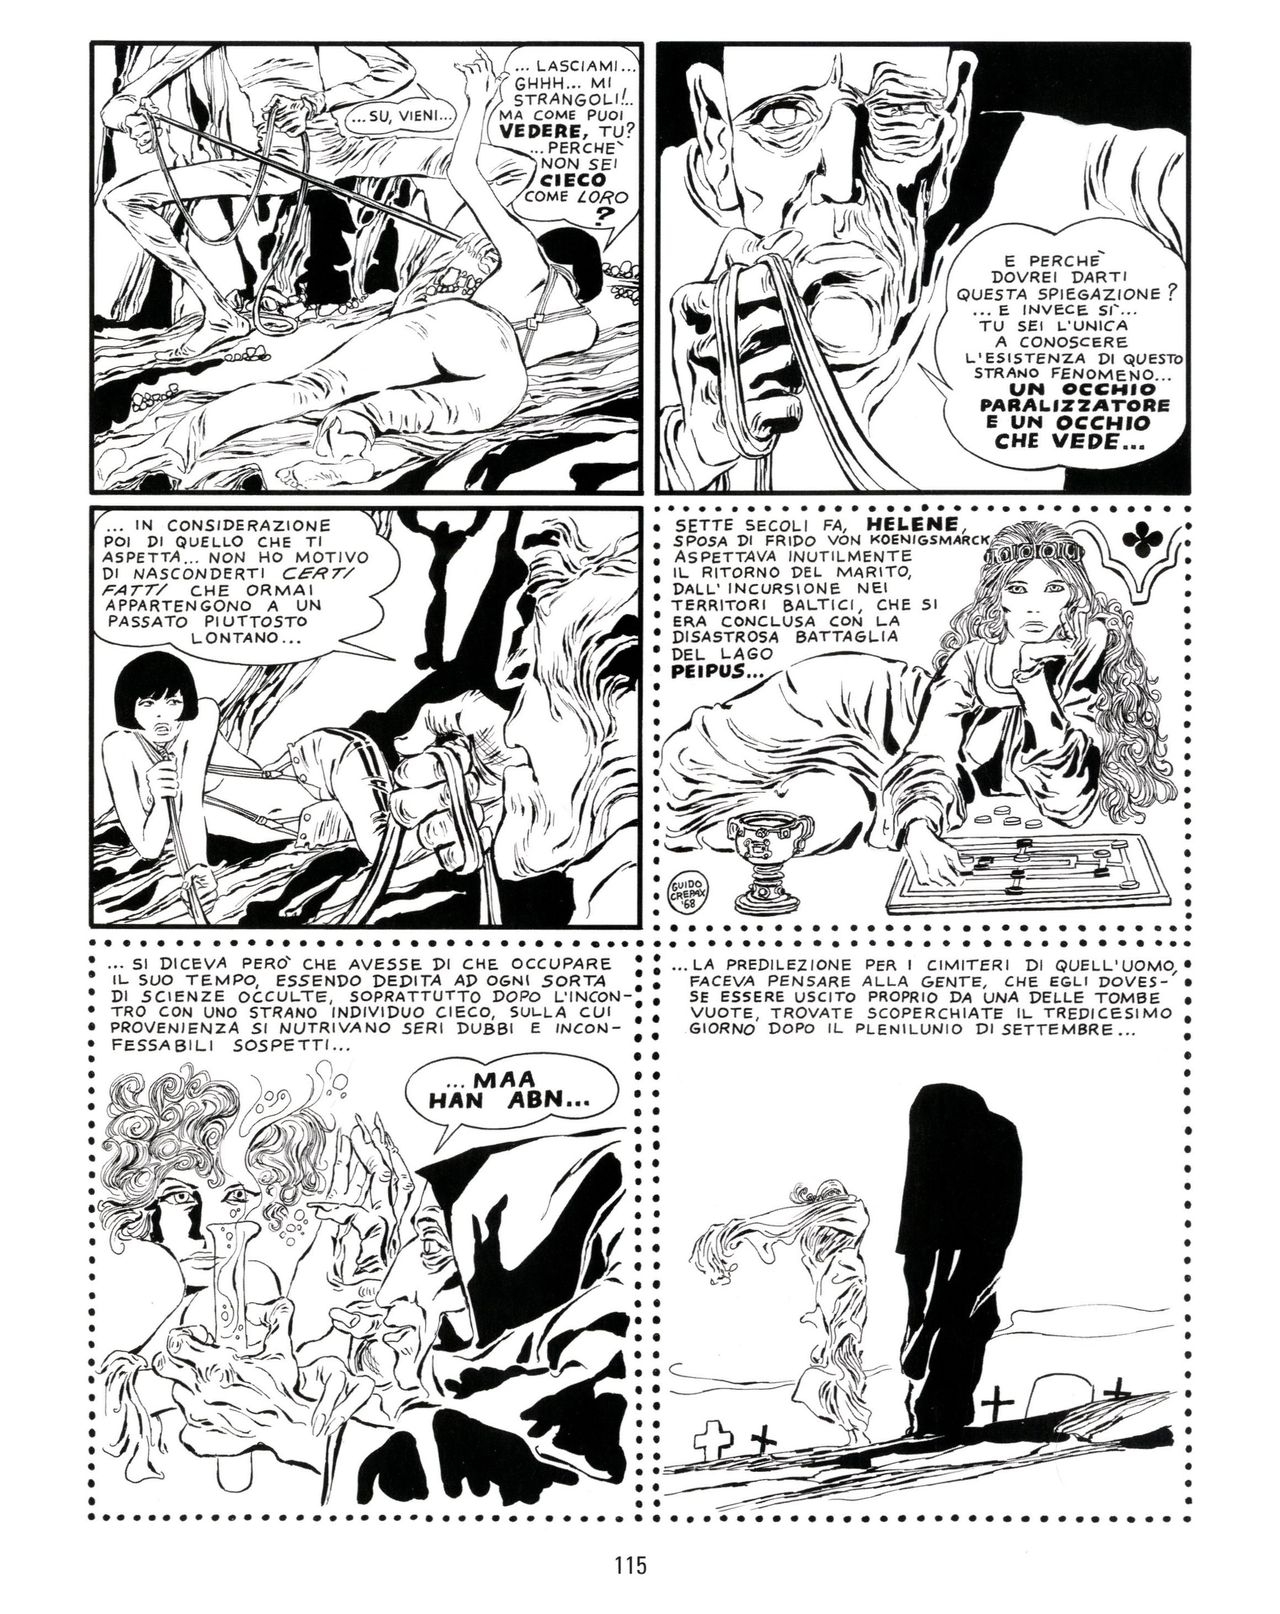 [Guido Crepax] Erotica Fumetti #25 : L'ascesa dei sotterranei : I cavalieri ciechi [Italian] 116